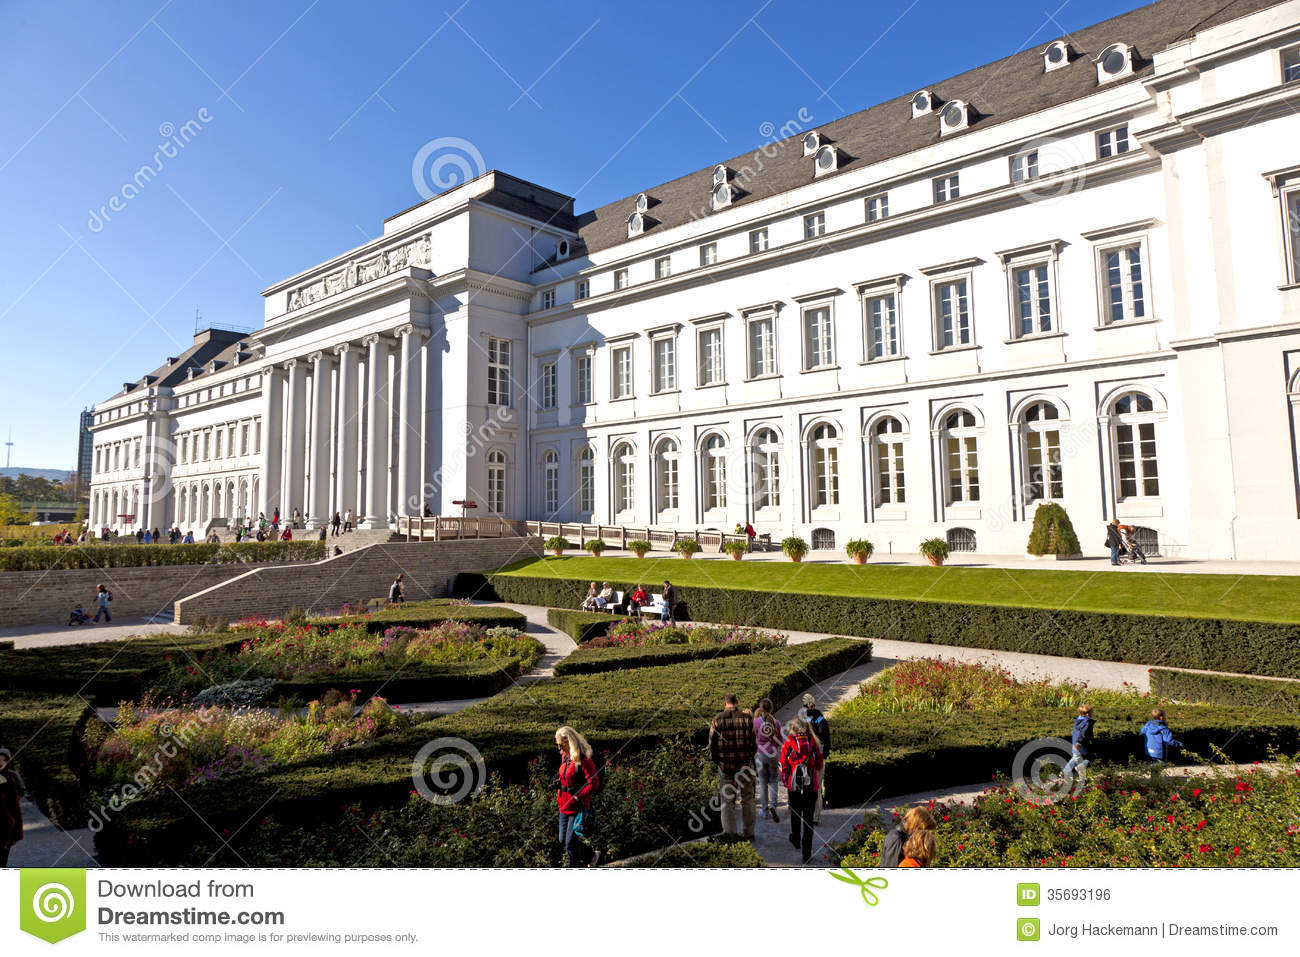 Nice Images Collection: Electoral Palace, Koblenz Desktop Wallpapers